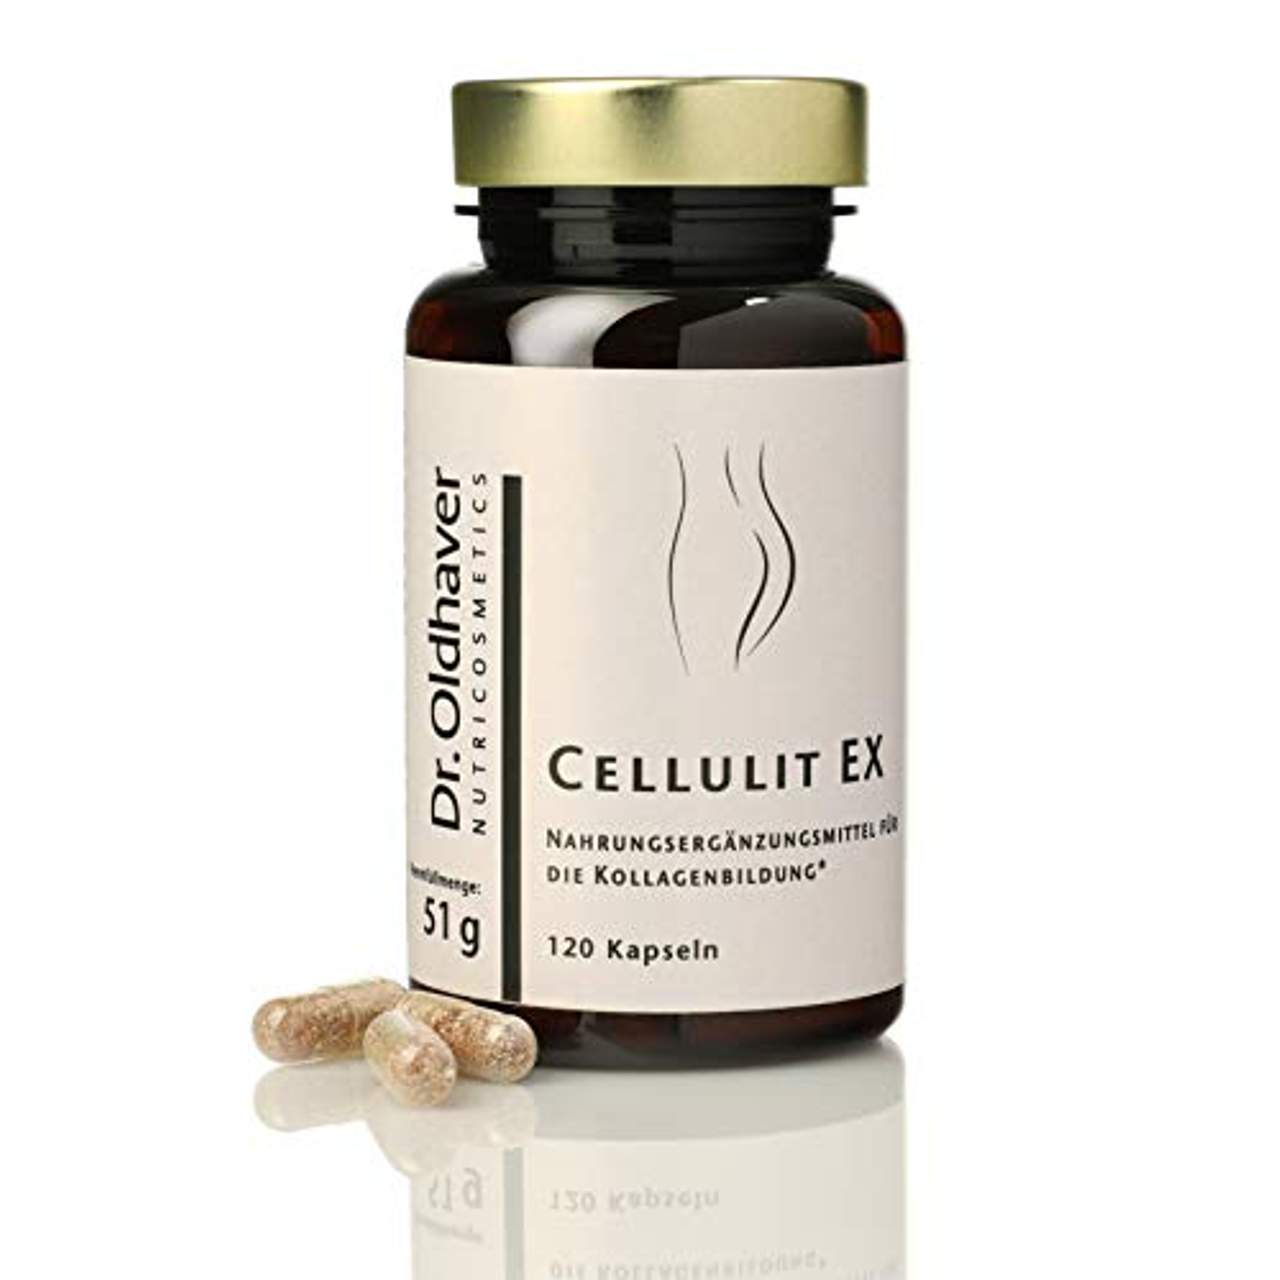 Dr Oldhaver CellulitEX Anti-Cellulite Kapseln